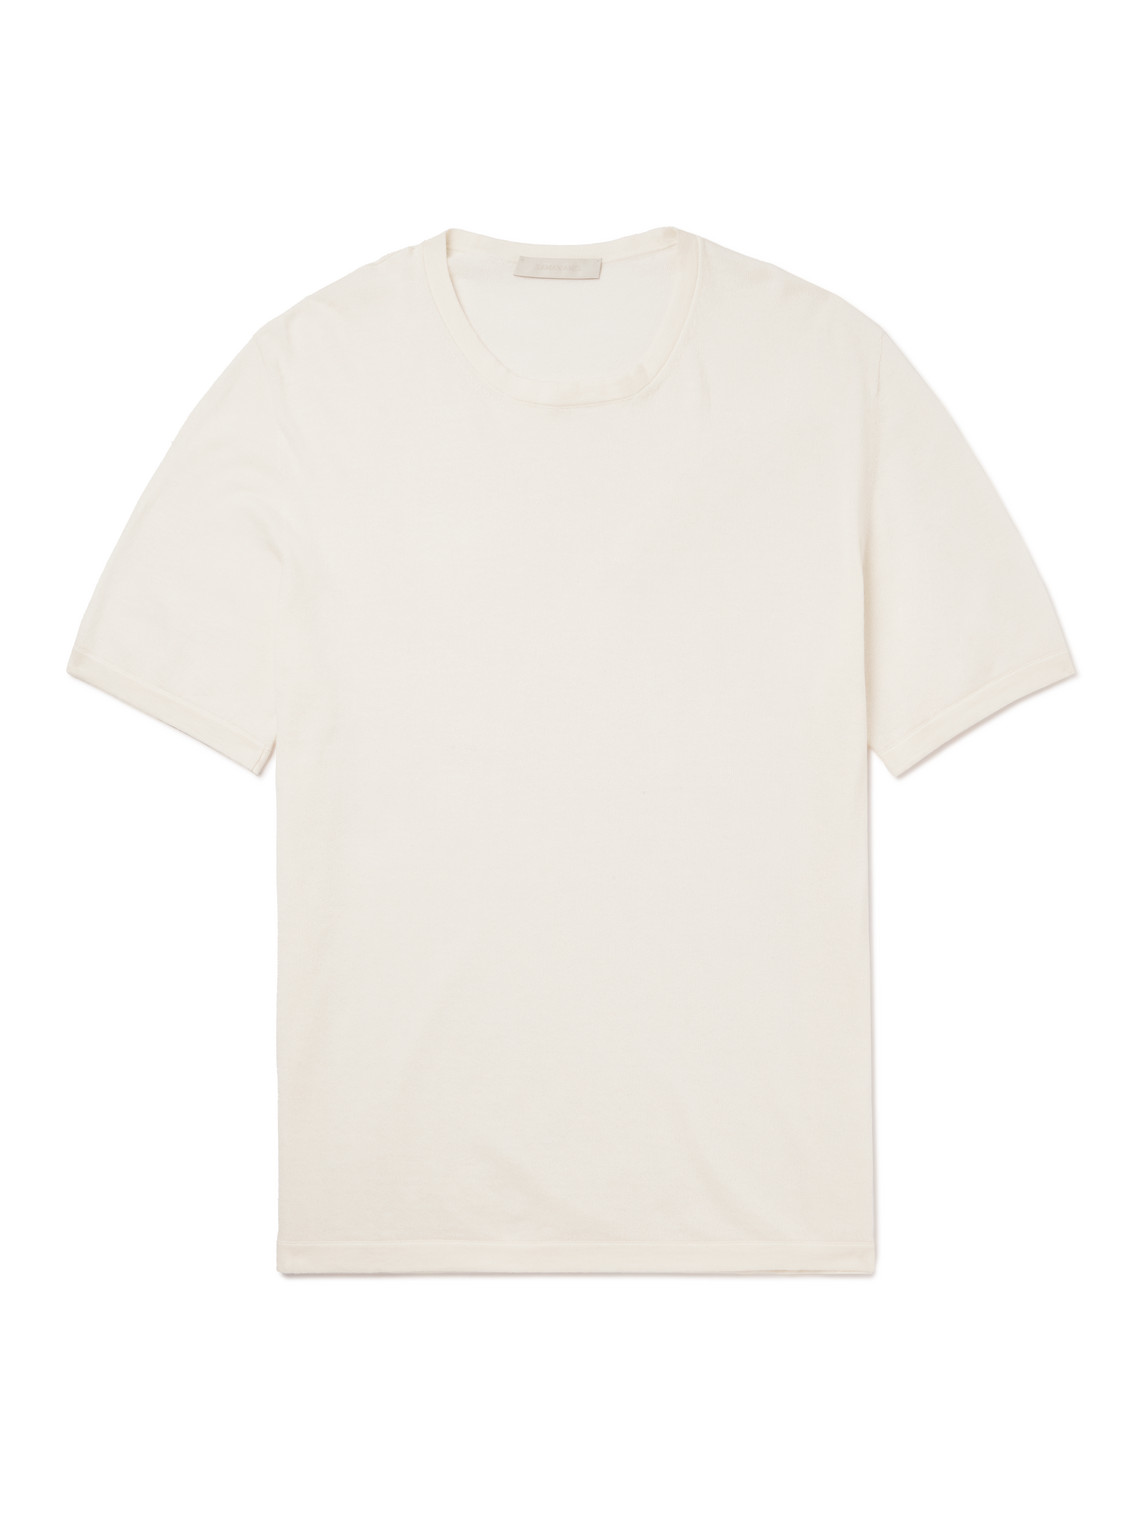 Slim-Fit Cotton and Cashmere-Blend T-Shirt